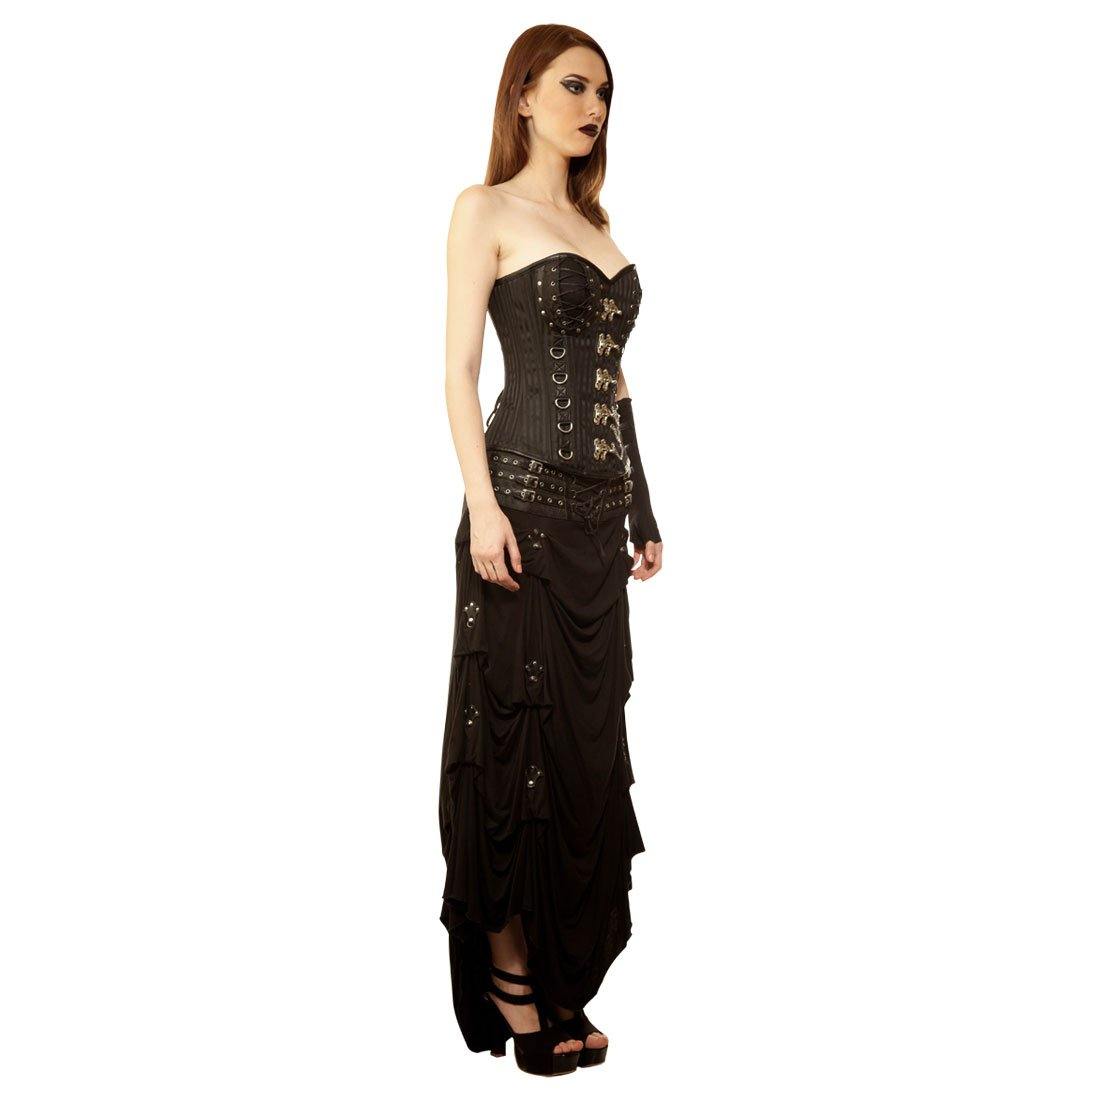 Sofiyko Gothic Authentic Steel Boned Overbust Corset Dress - Corset Revolution